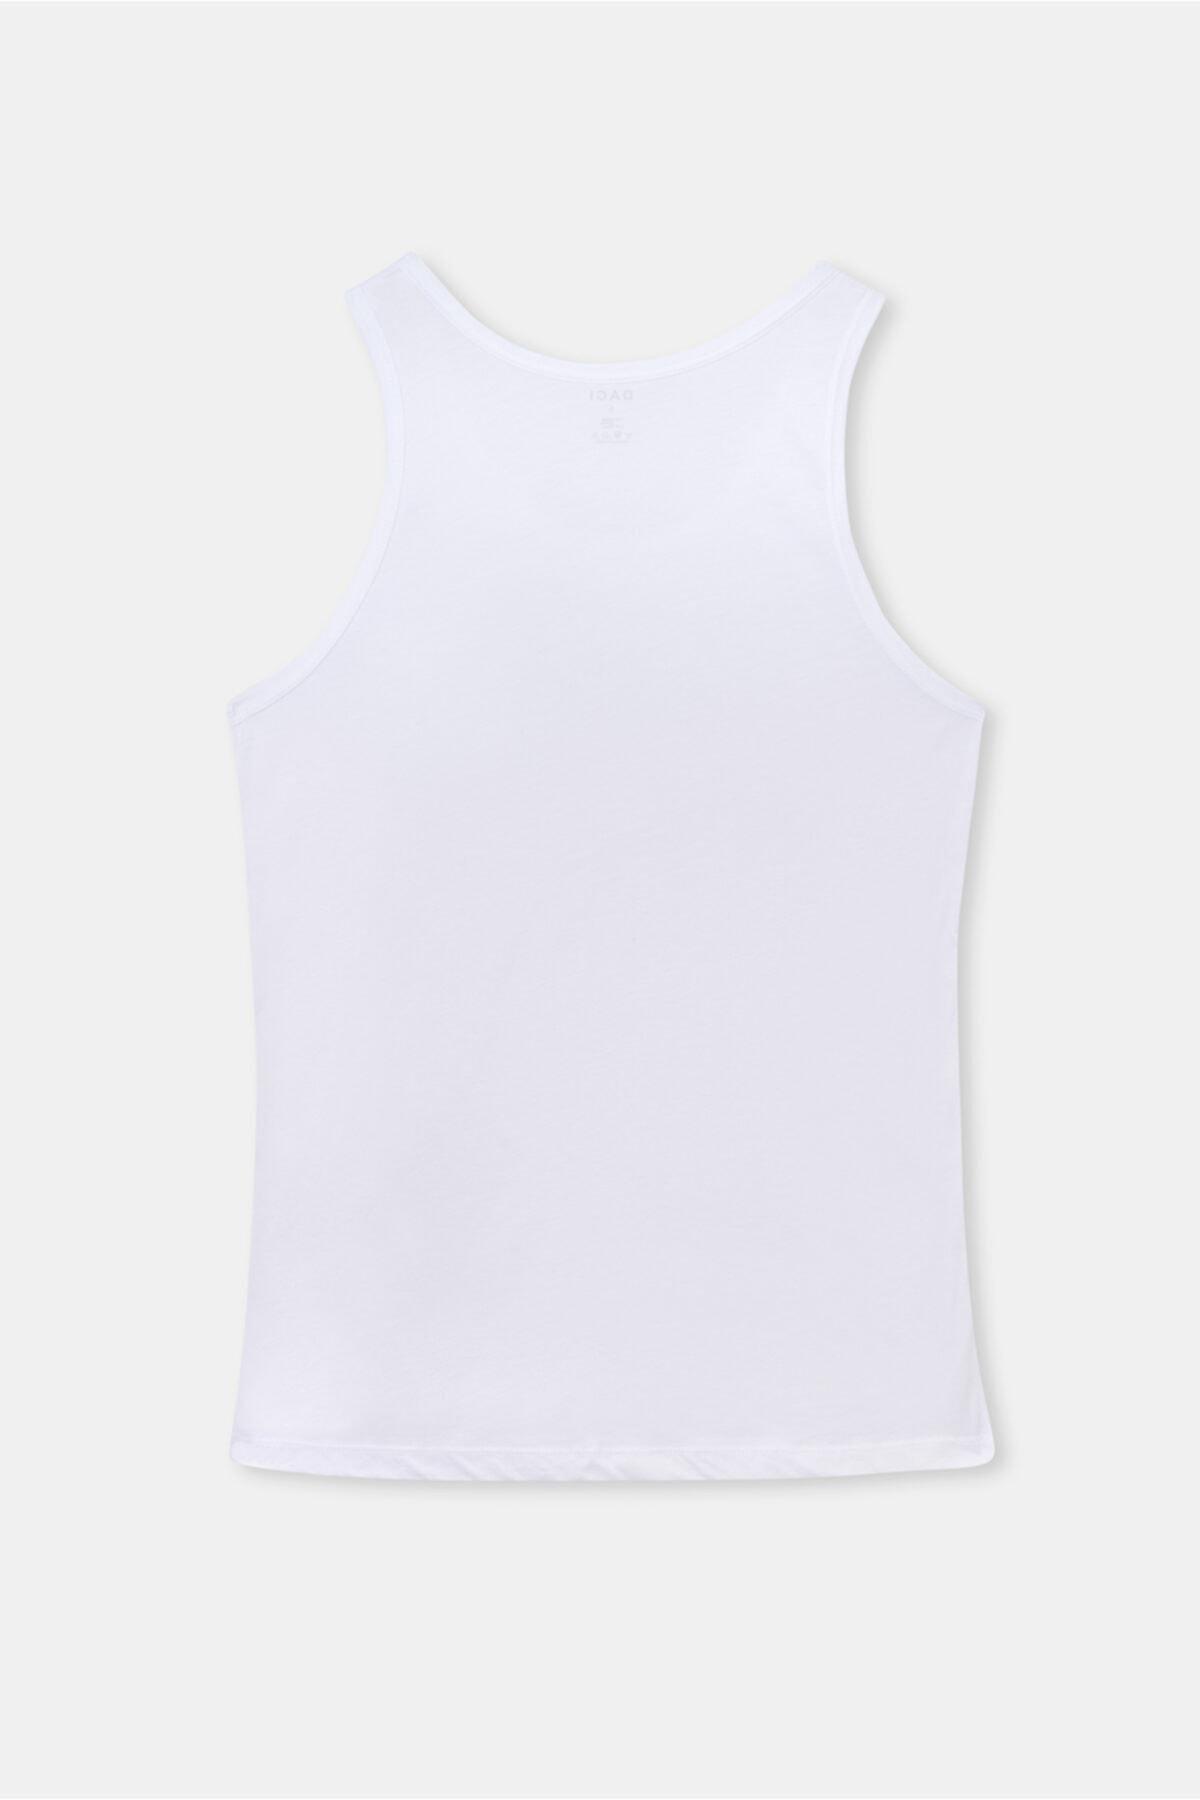 Dagi - White Modal Undershirt